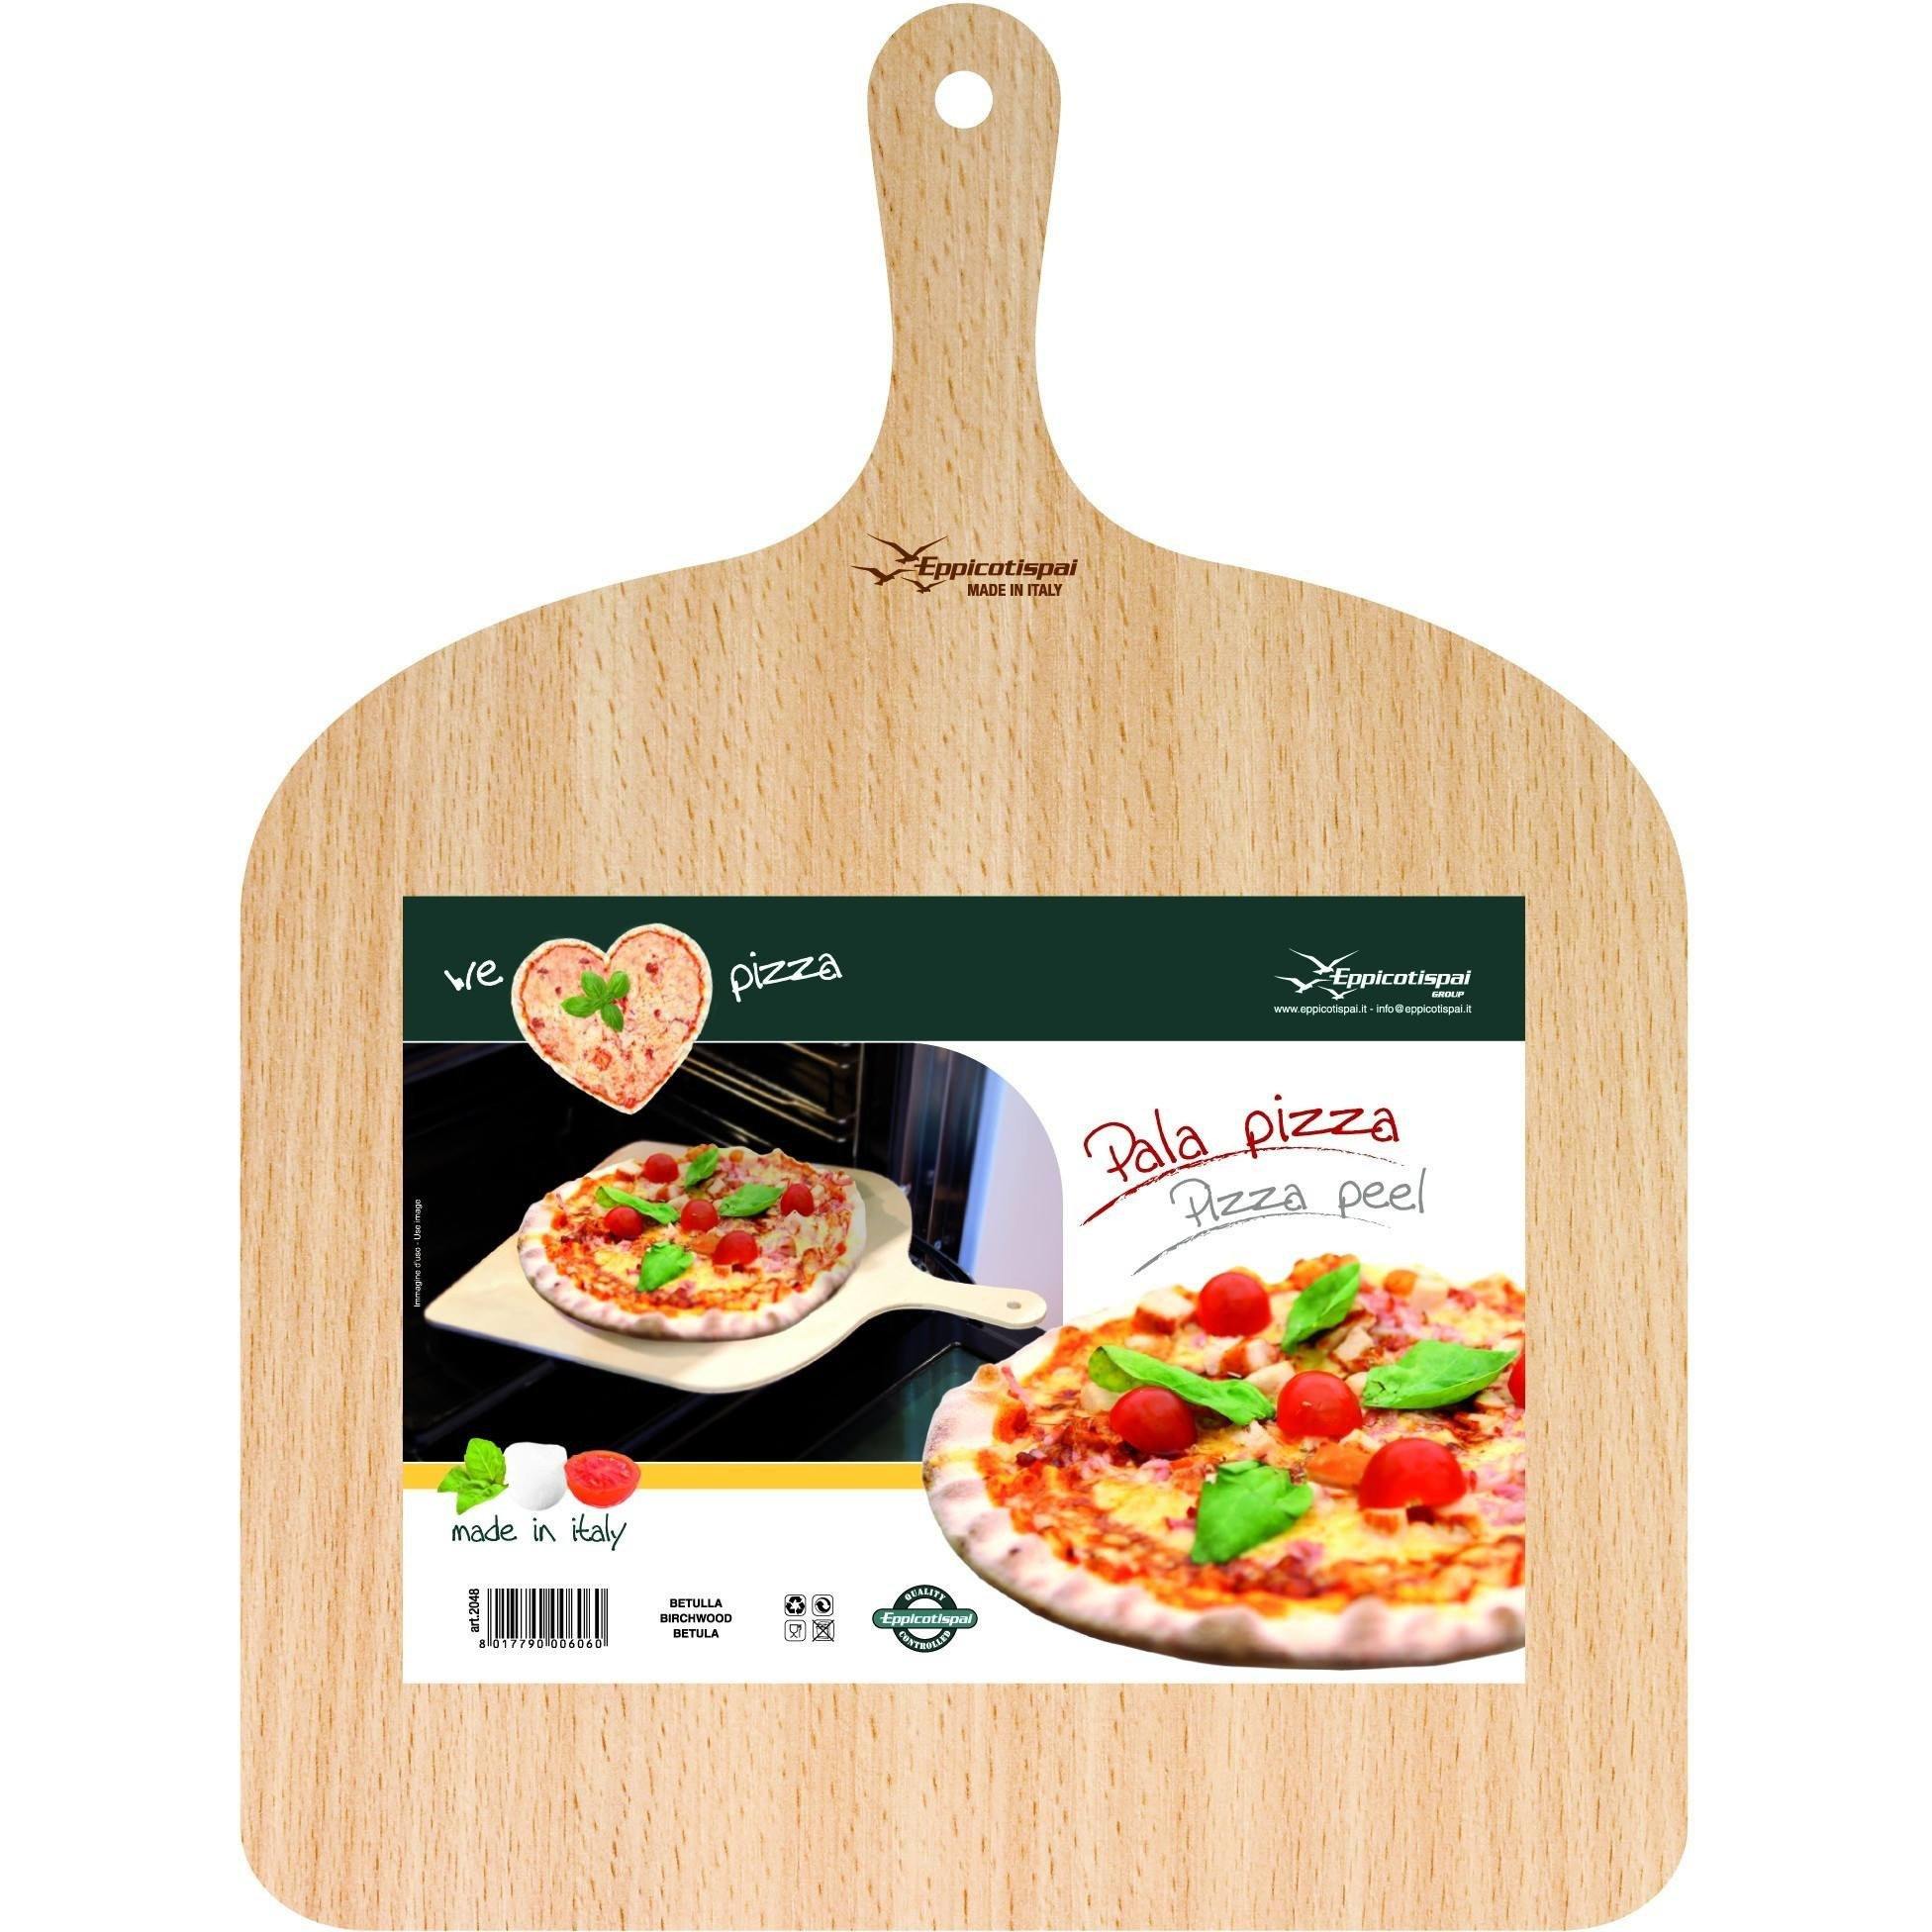 Pizza Peel / Paddle - Pasta Kitchen (tutto pasta)